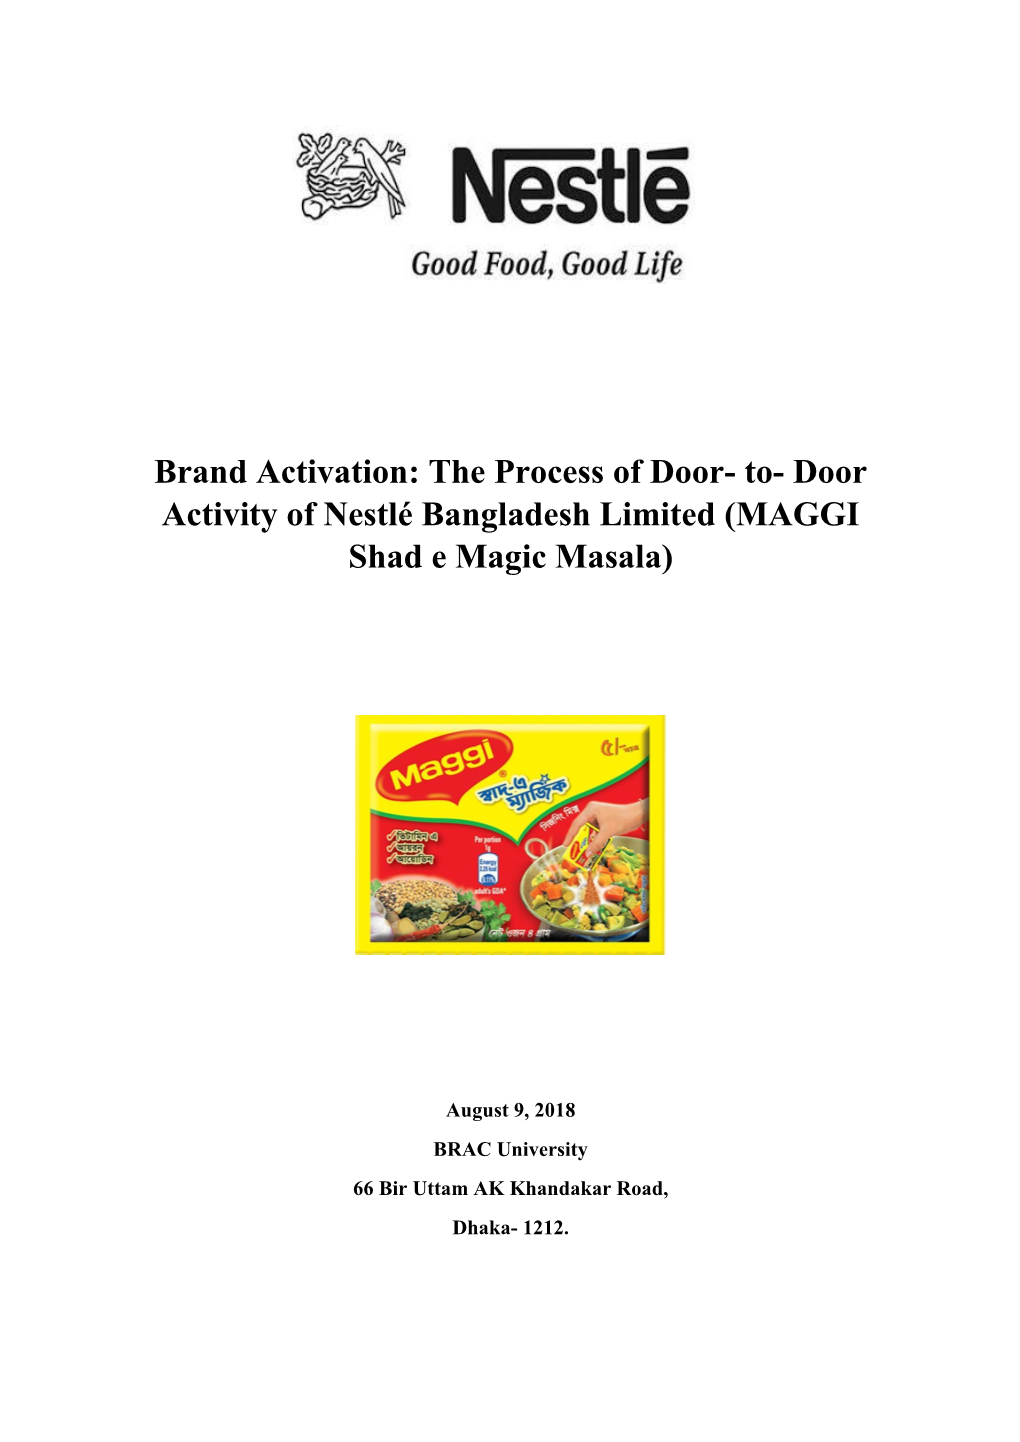 Brand Activation: the Process of Door- To- Door Activity of Nestlé Bangladesh Limited (MAGGI Shad E Magic Masala)